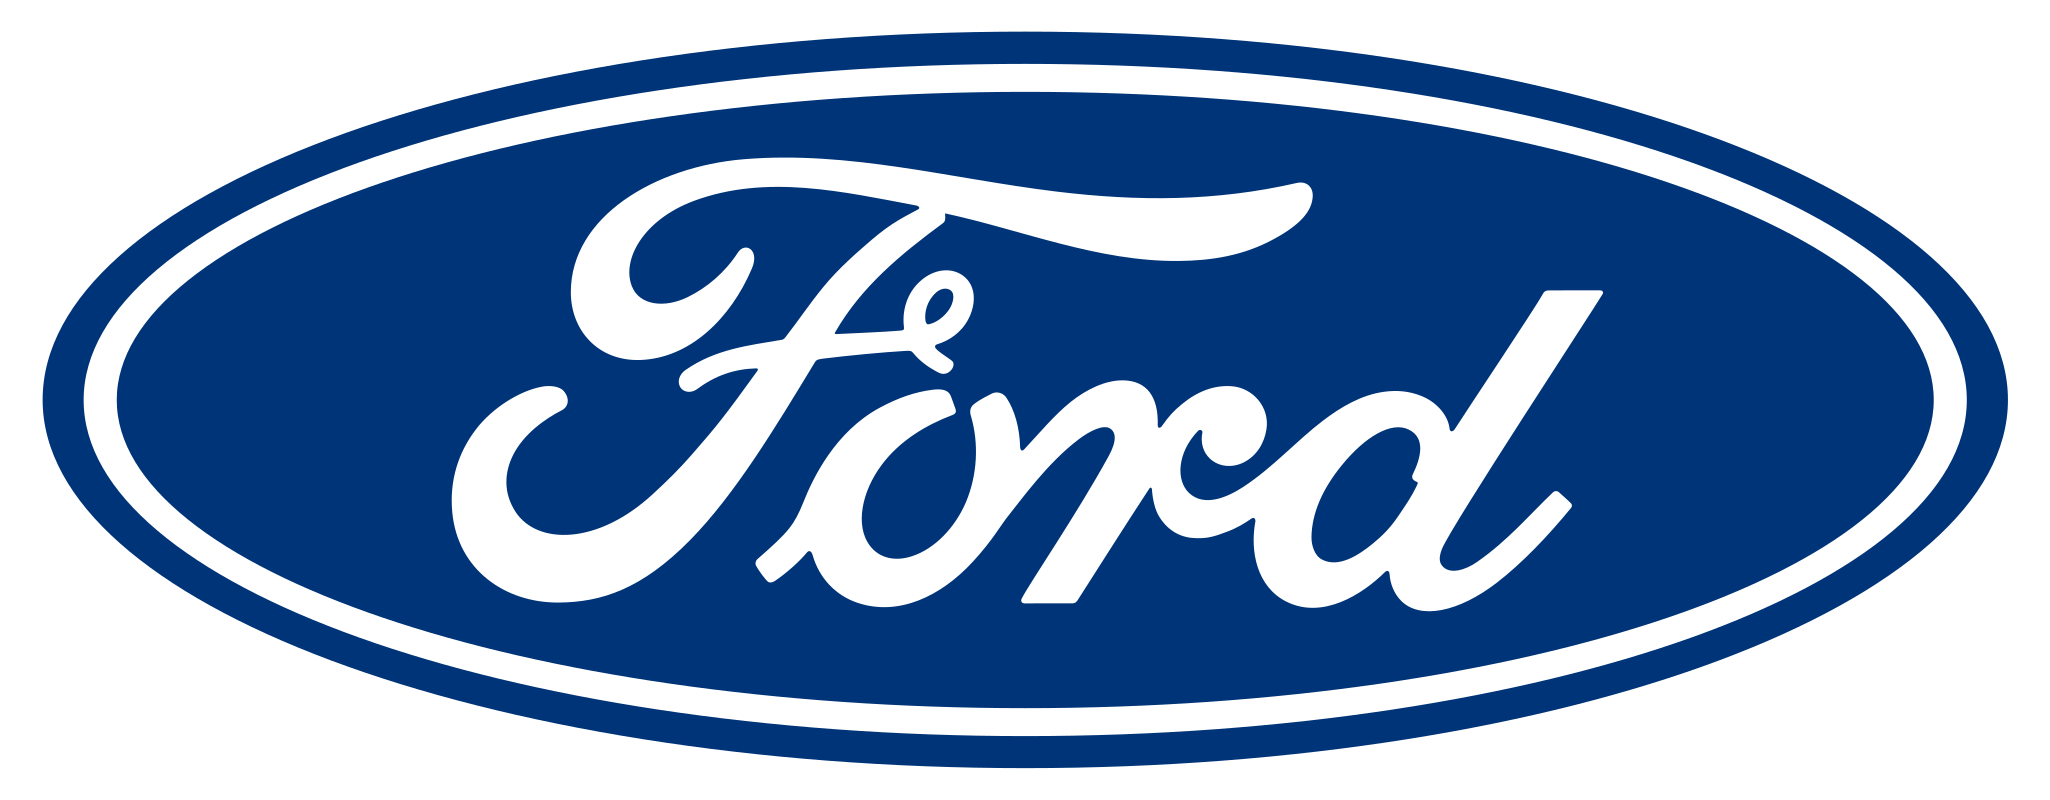 Cars Logo Brands PNG Transparent